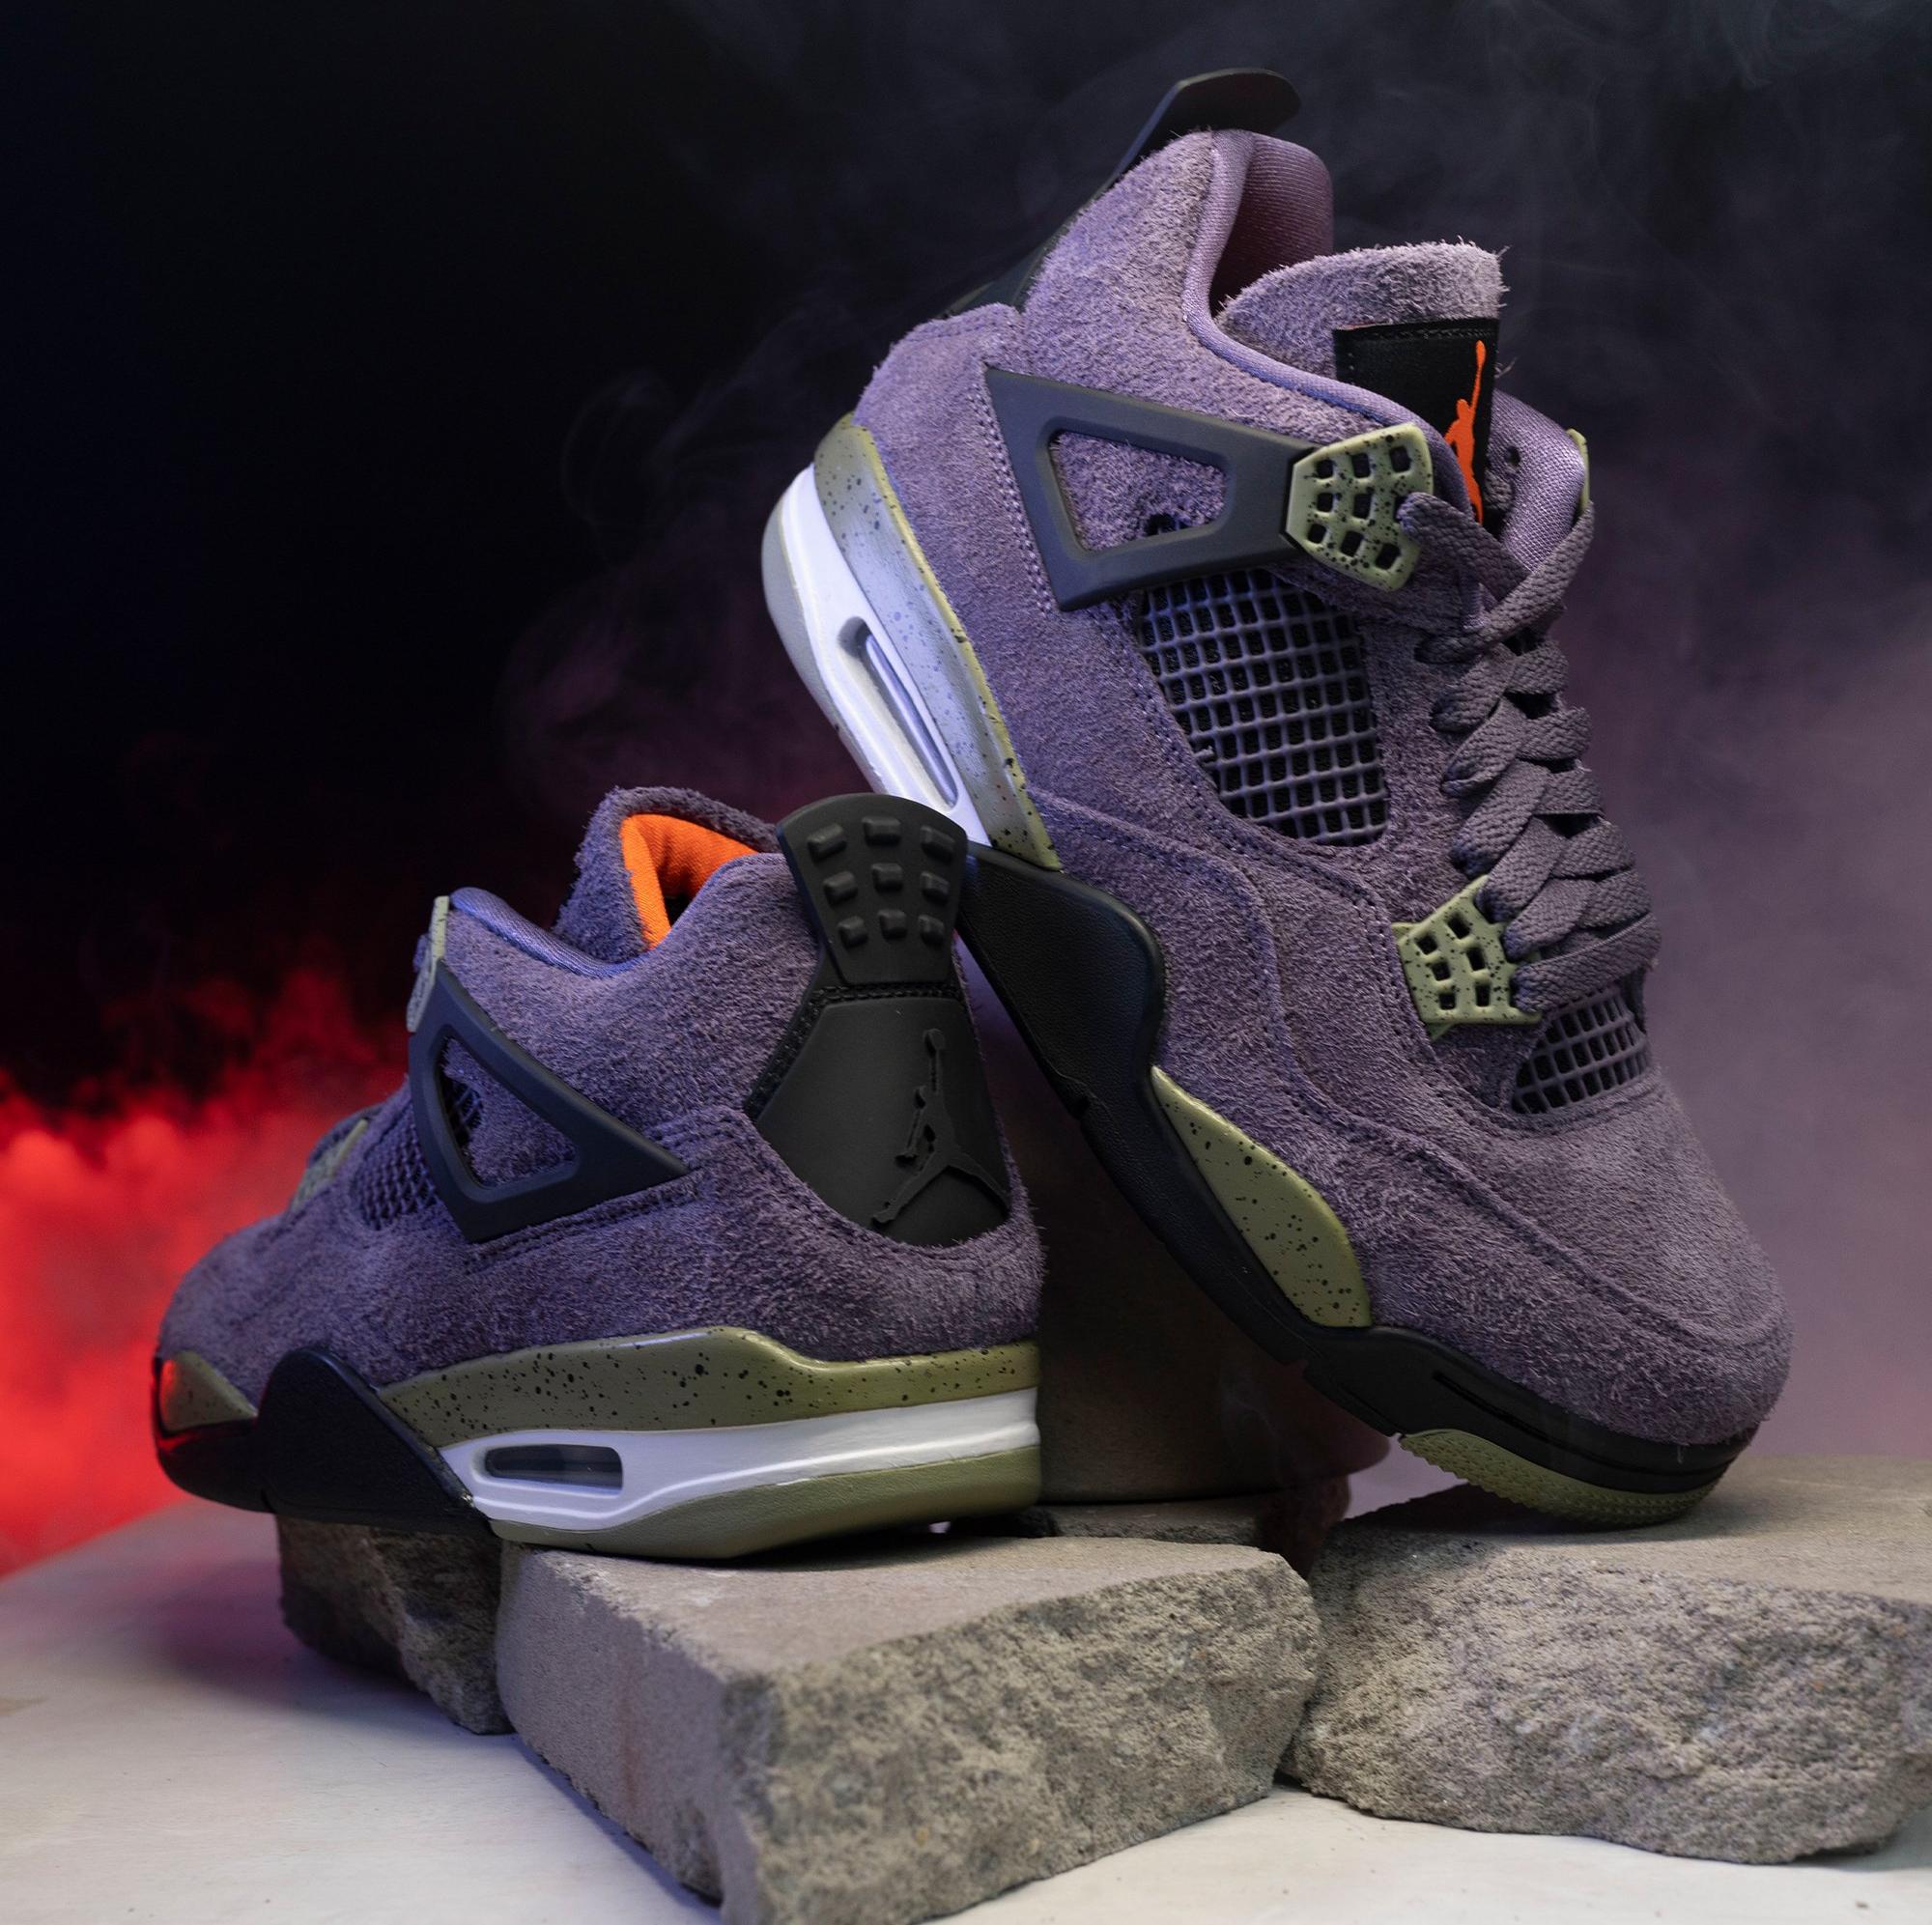 Sneakers Release &#8211; Jordan Retro &#8220;Canyon Purple/Safety Orange/Alligator&#8221; Women&#8217;s Launching